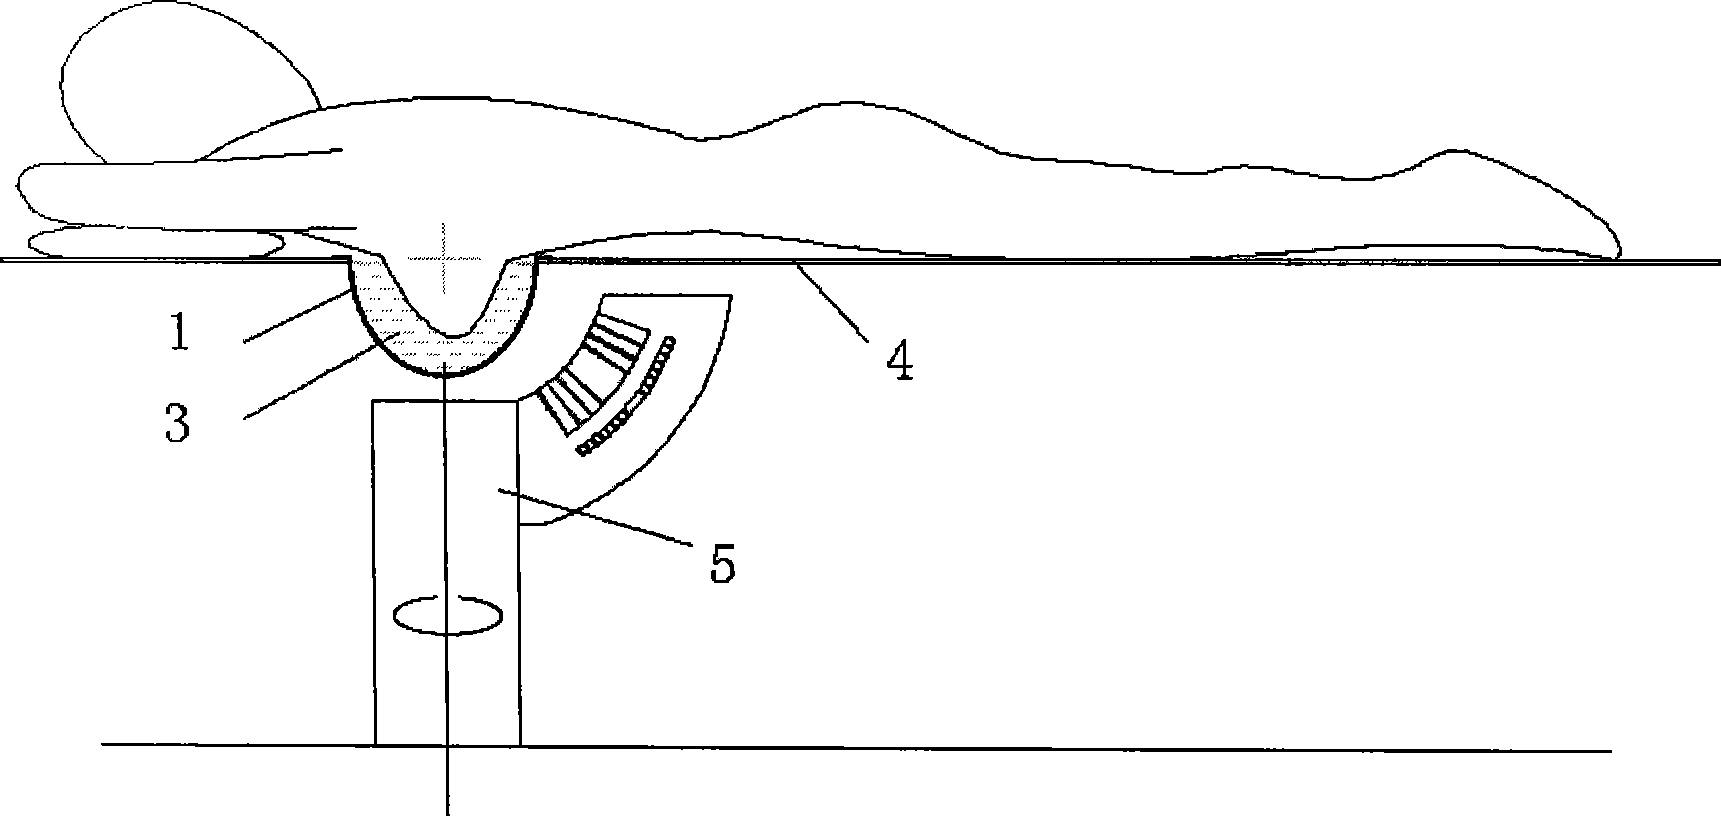 Glandula mammaria positioning device